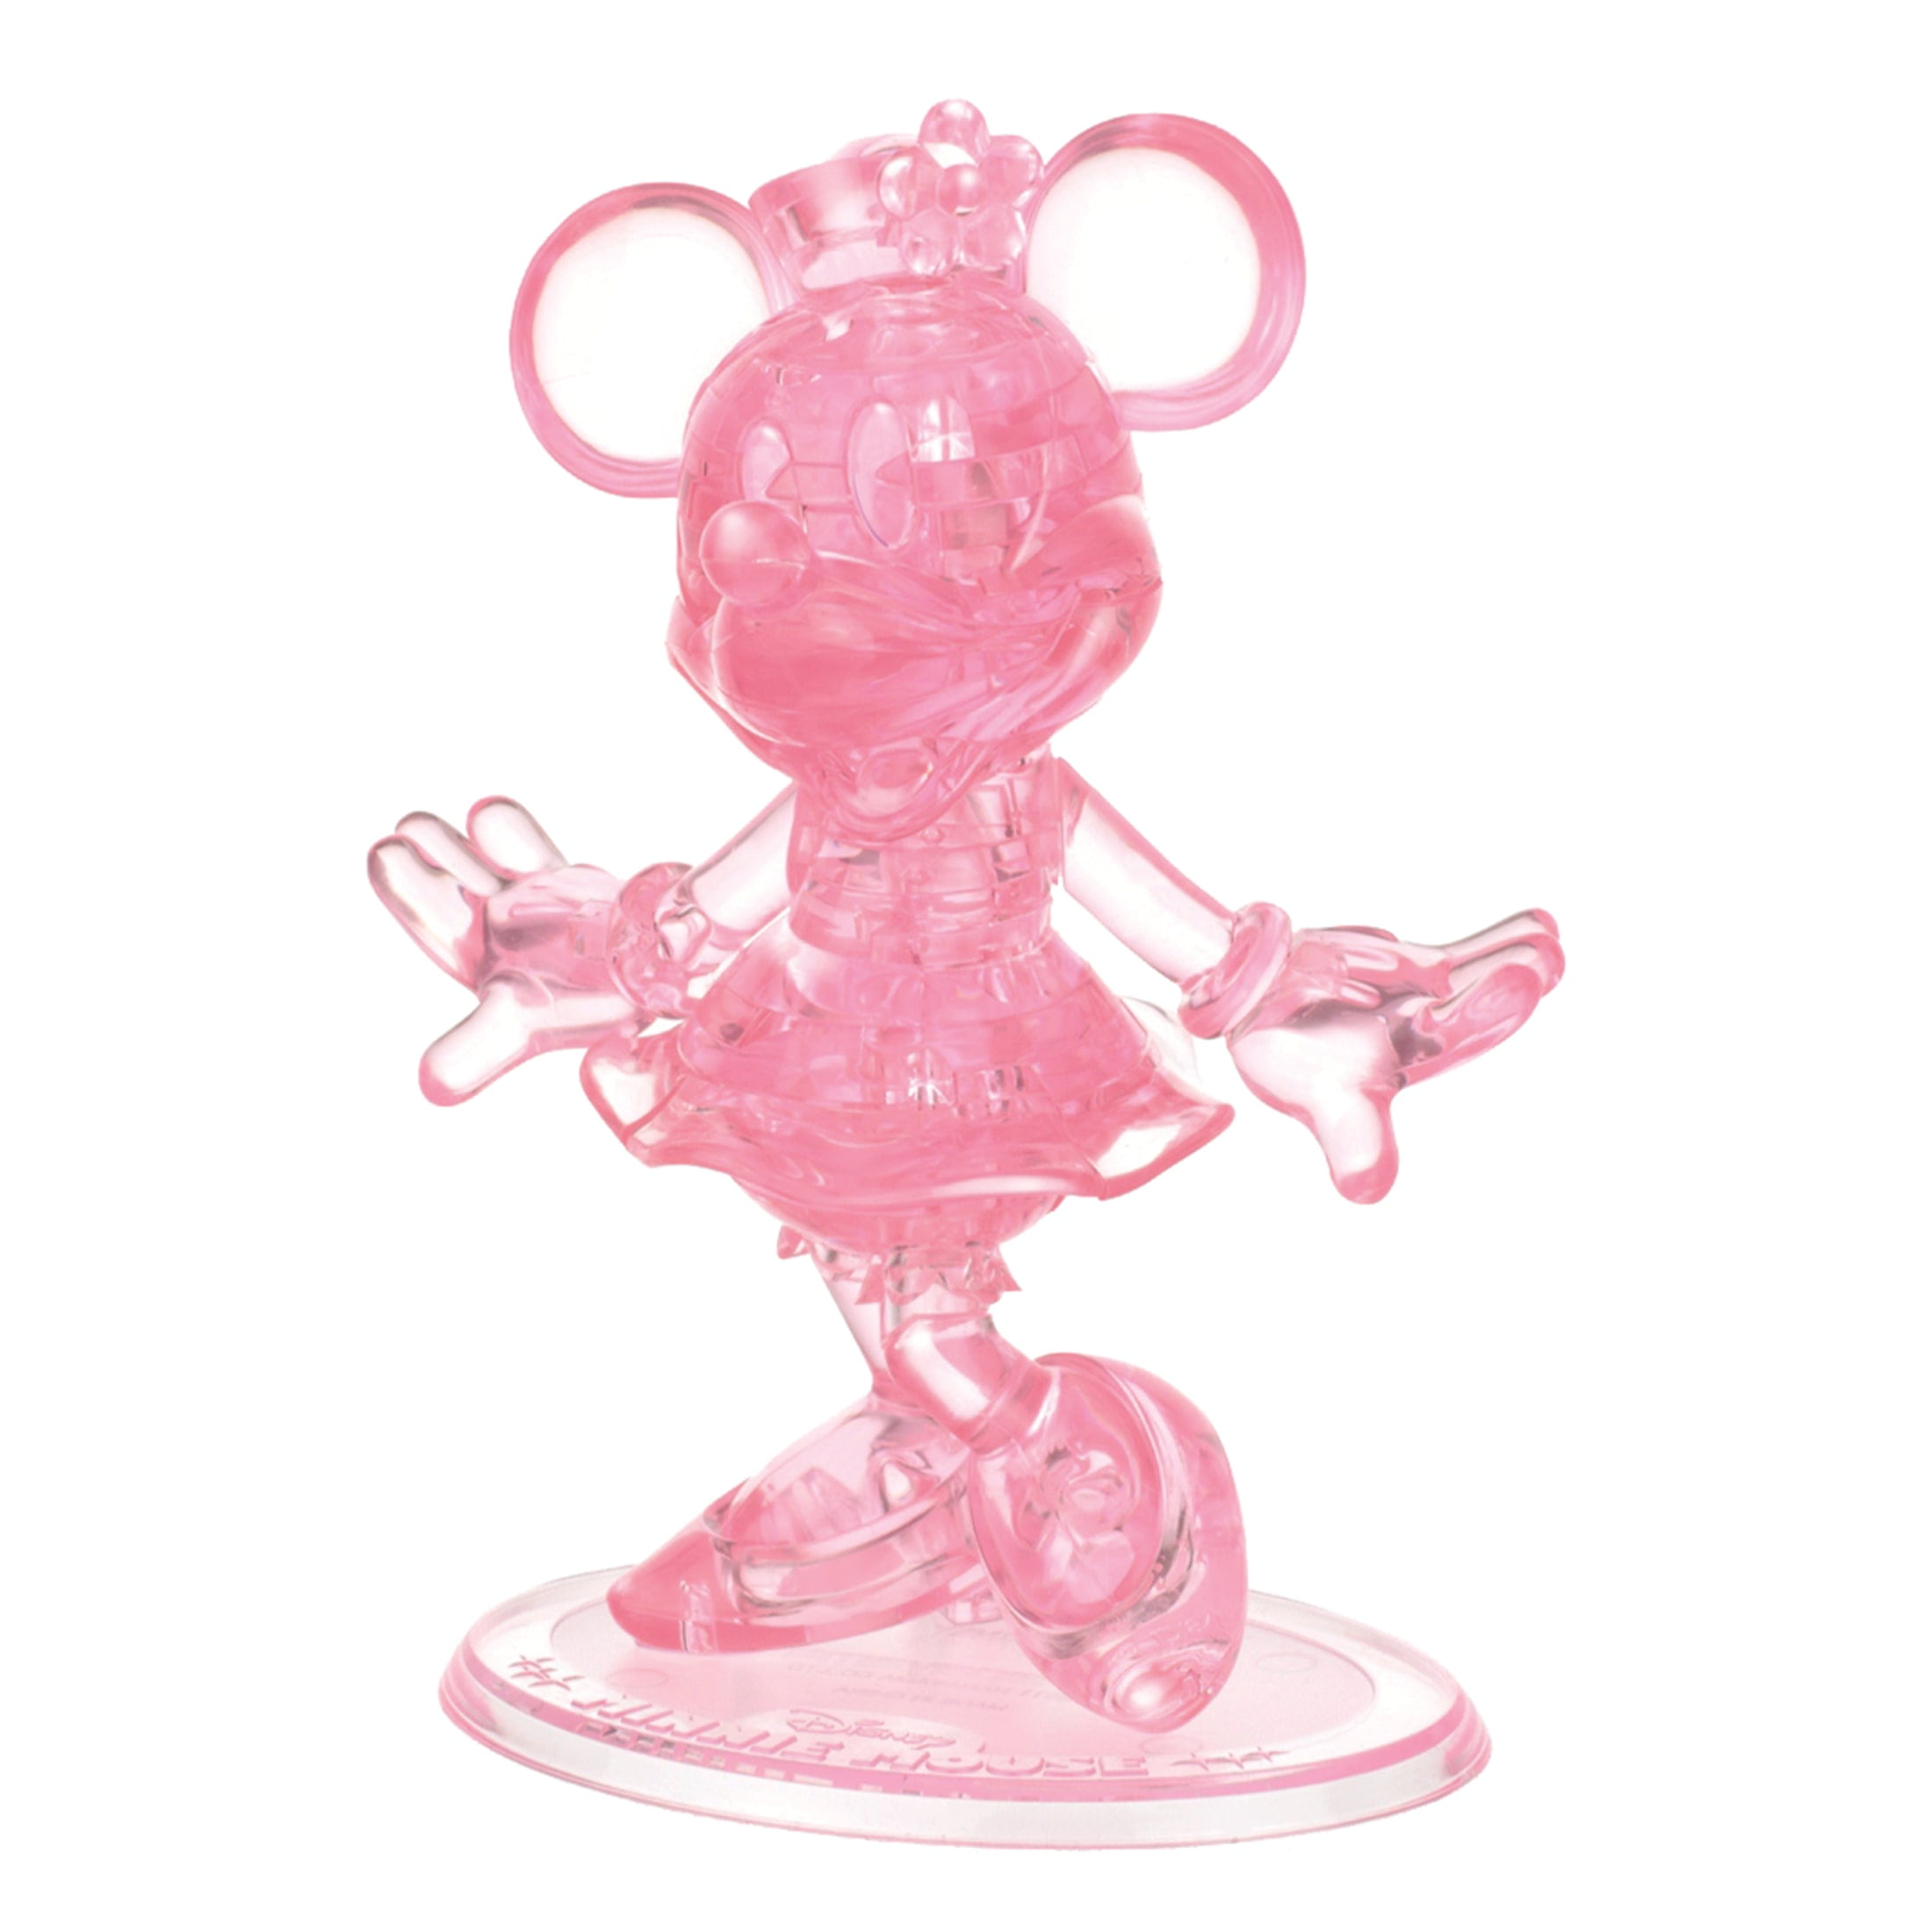 Bepuzzled  Hanayama US Seller NEW 3D Crystal Puzzle Disney CHESHIRE CAT  Pink 